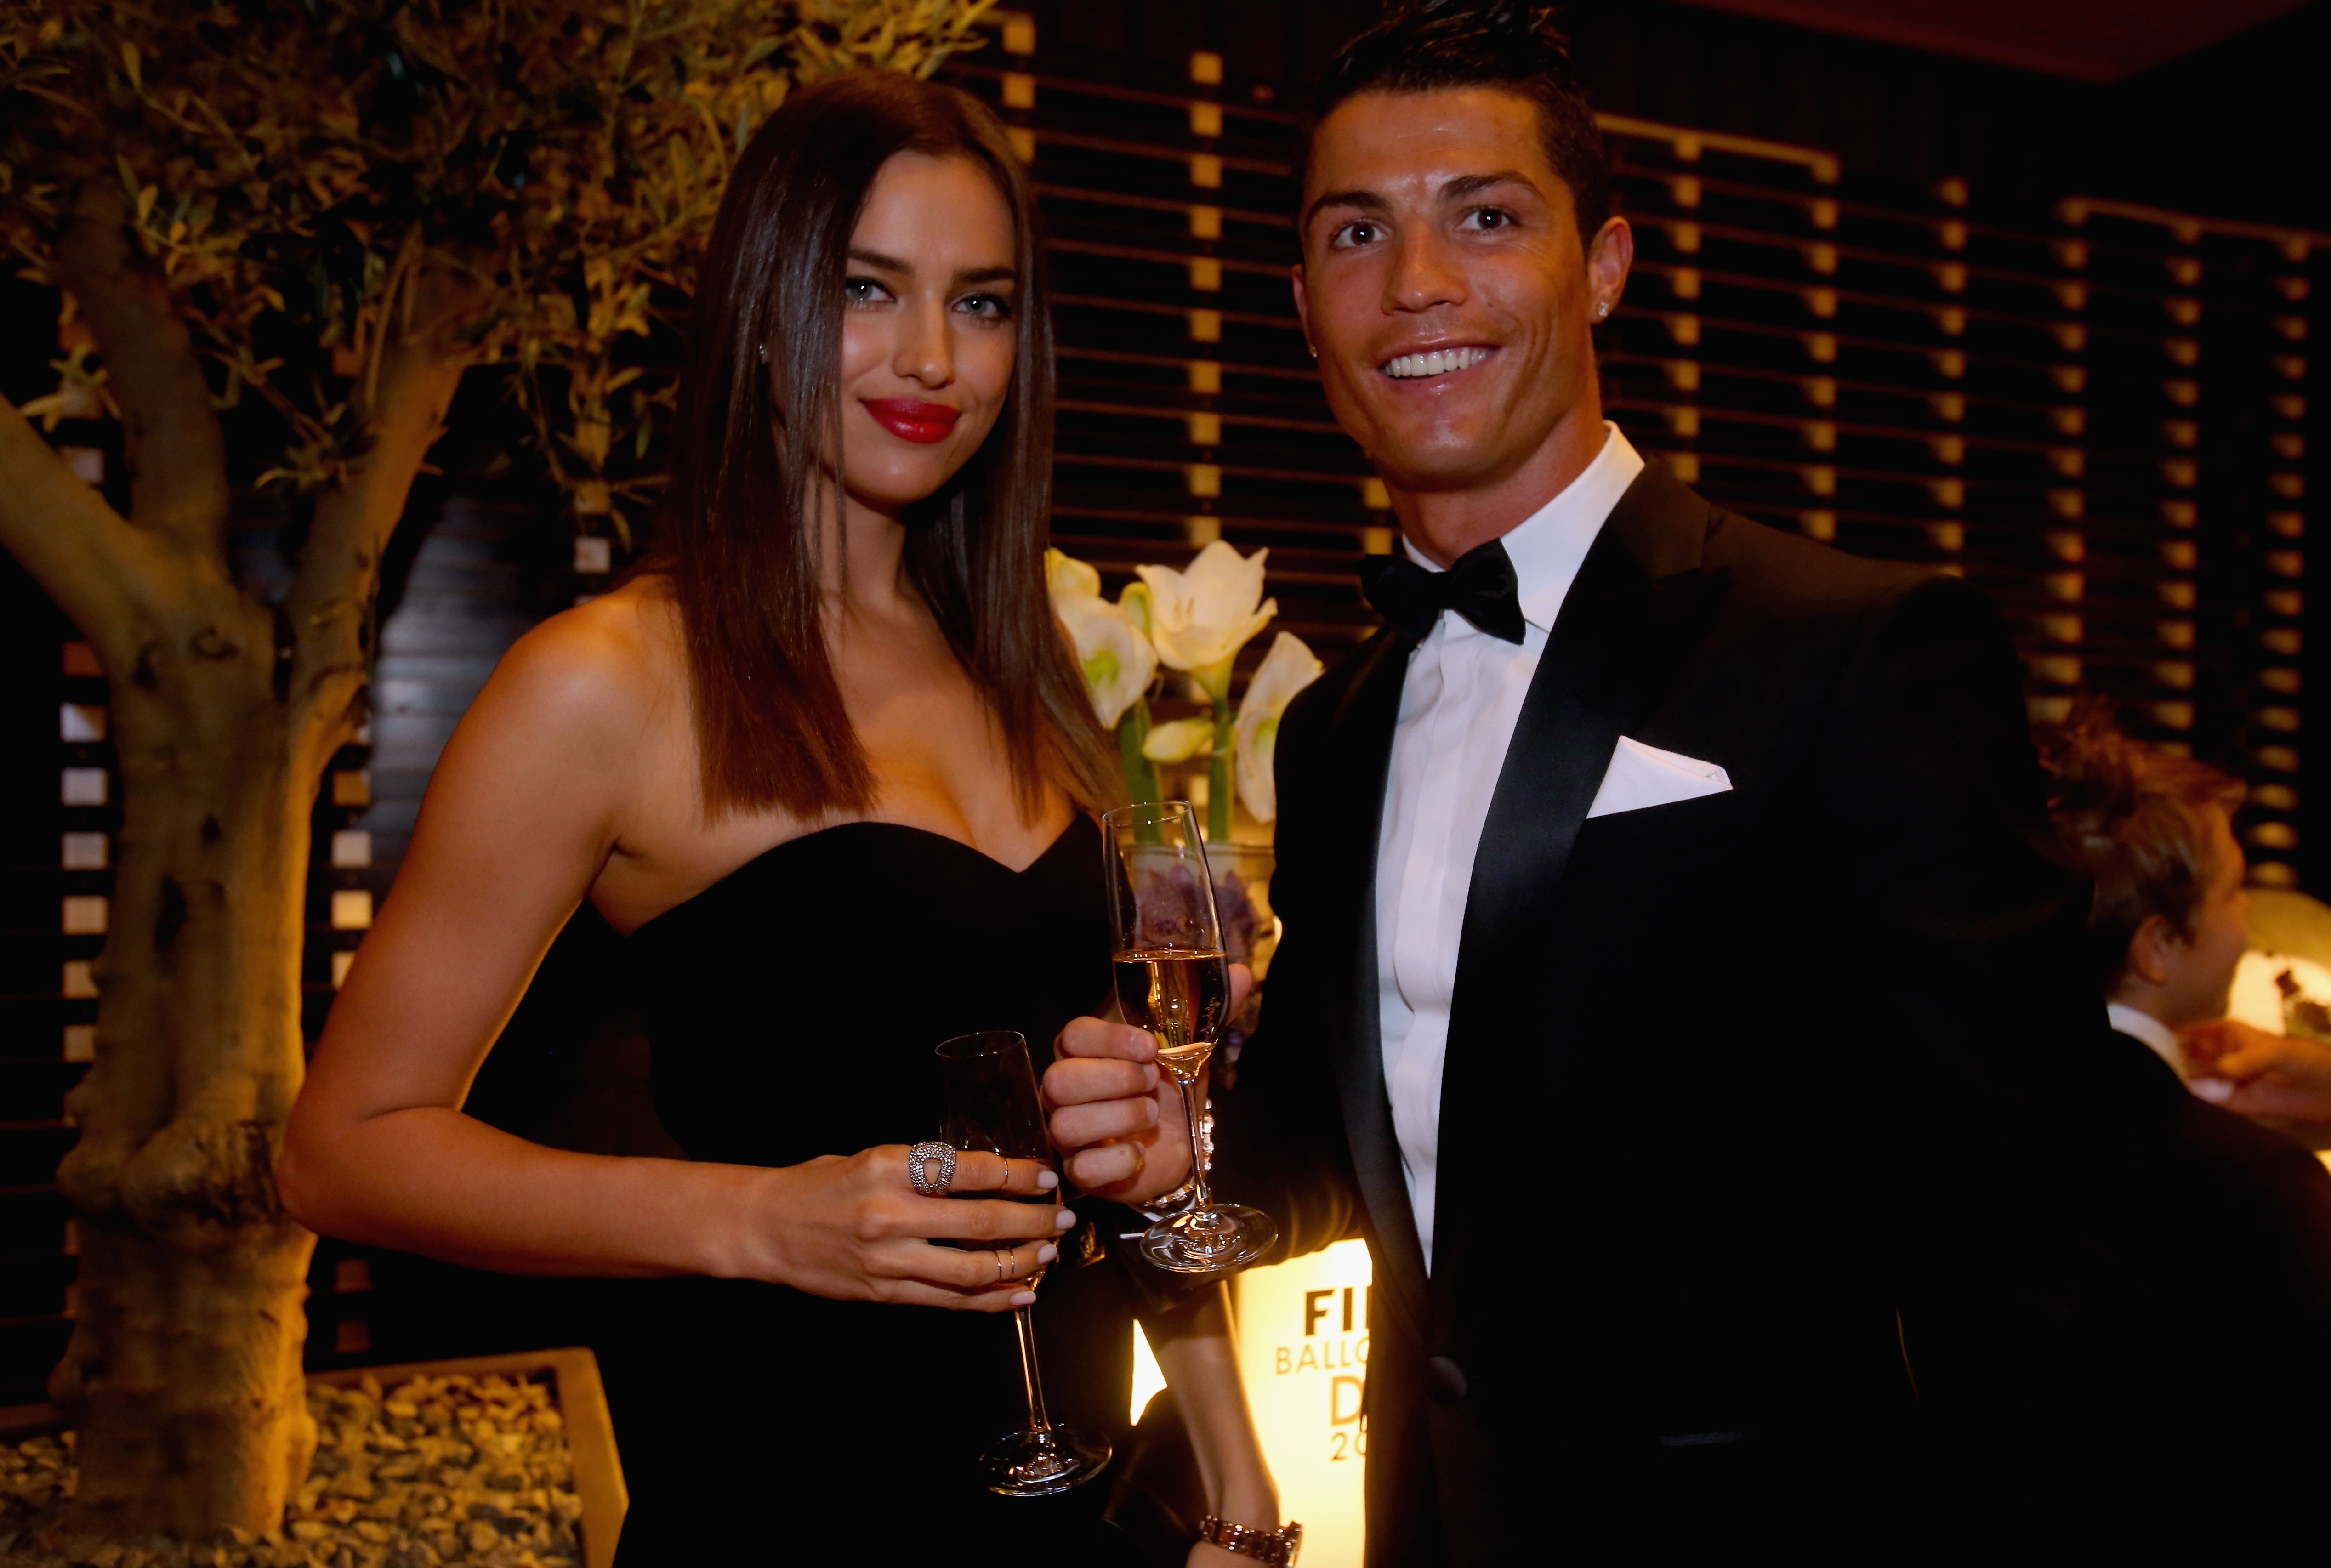 Cristiano Ronaldo with then-girlfriend Irina Shayk at the FIFA Ballon d'Or Gala in 2012